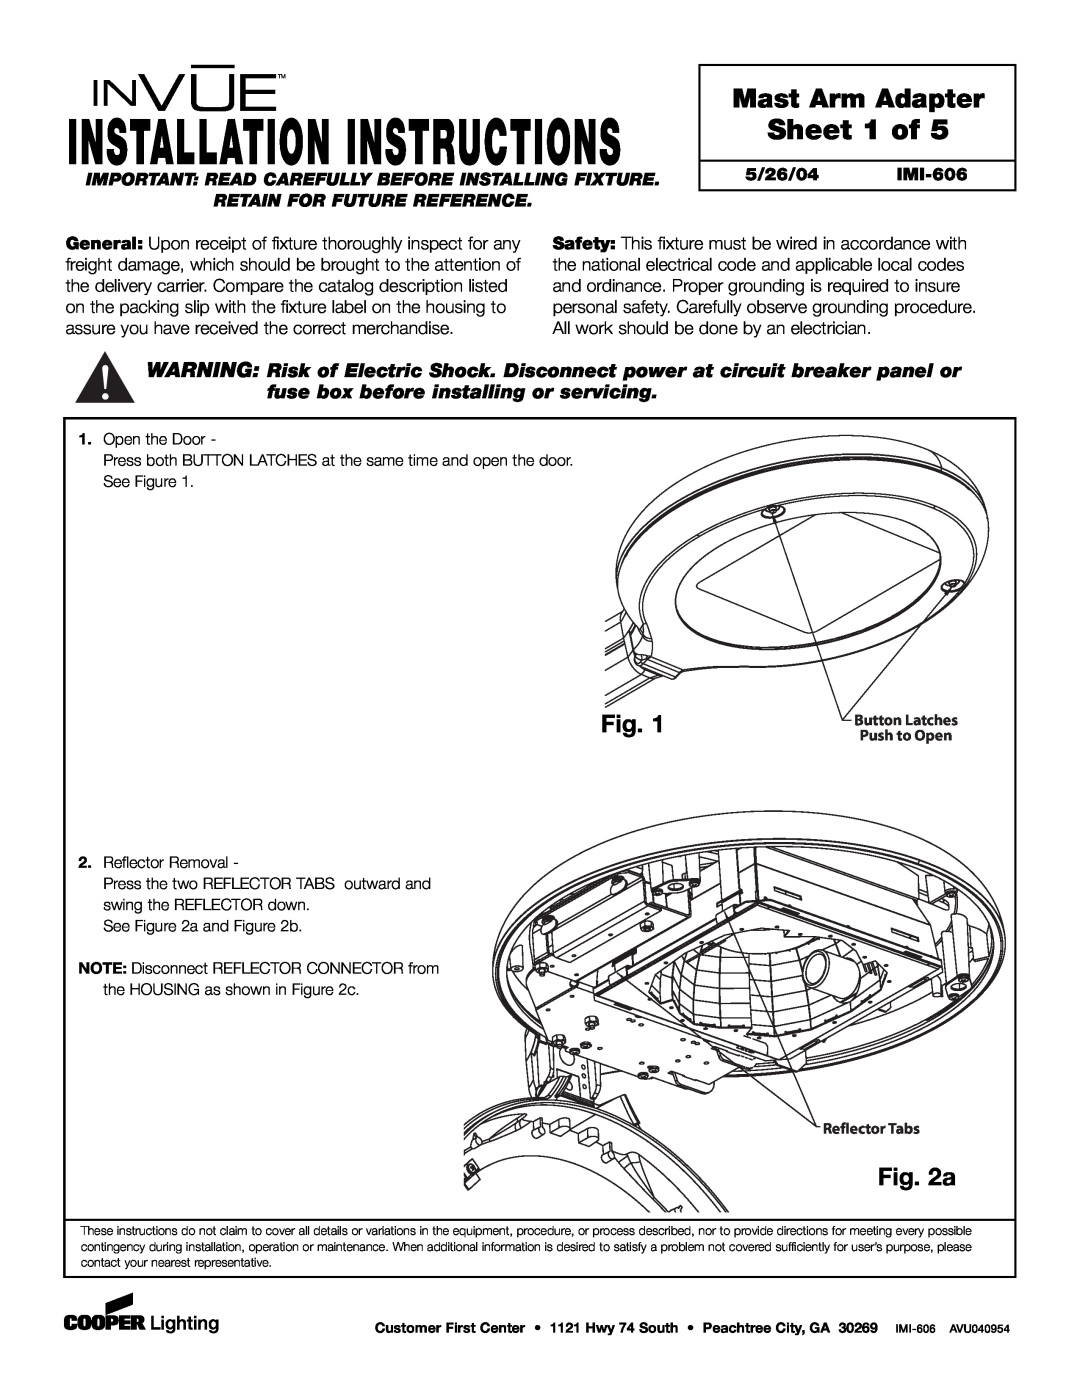 Cooper Lighting installation instructions Installation Instructions, Sheet 1 of, Mast Arm Adapter, 5/26/04 IMI-606 